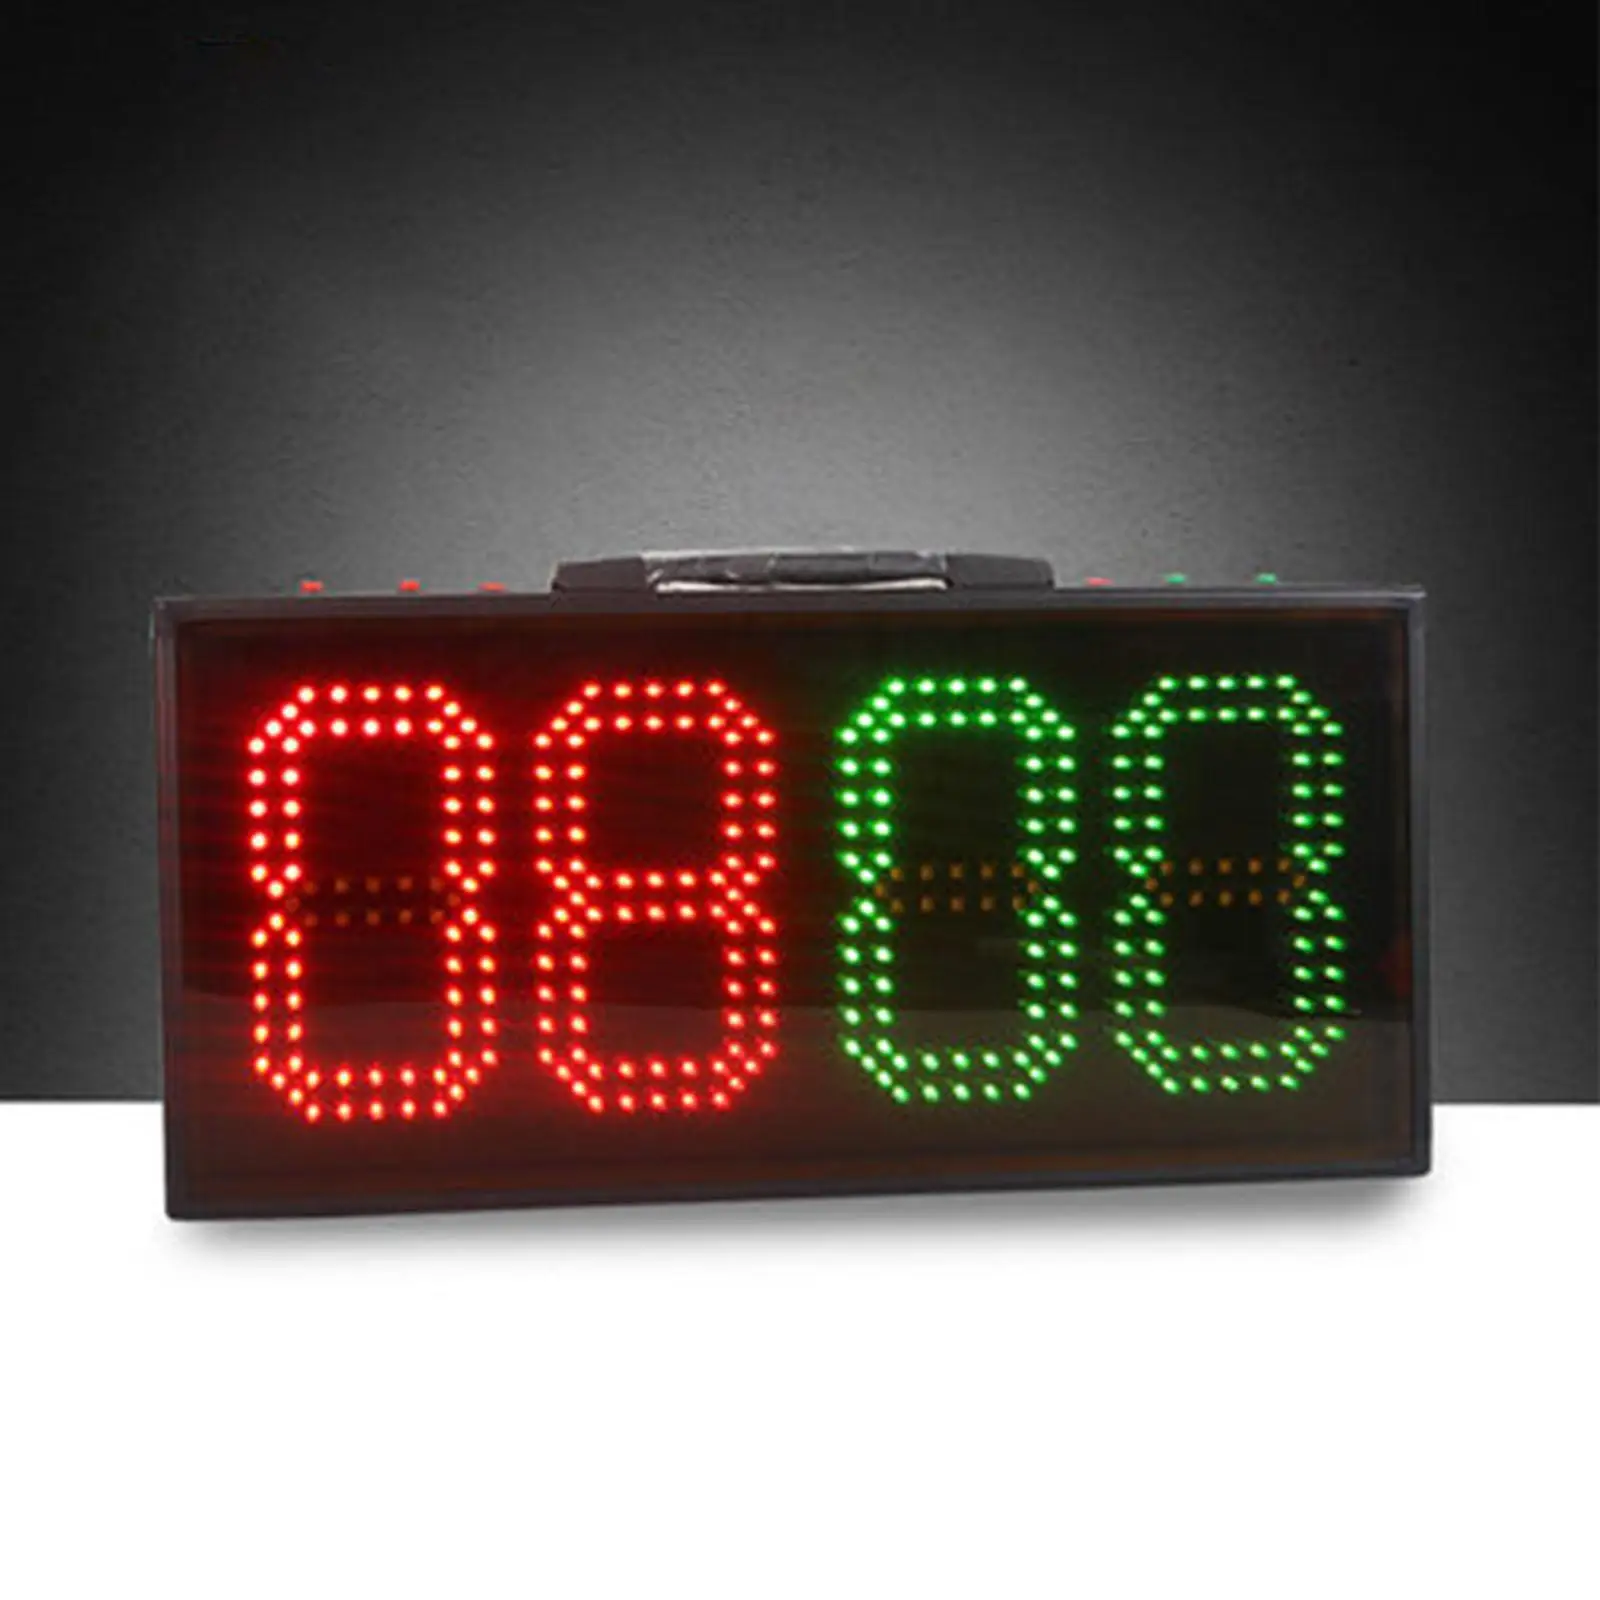 Portable Digital Scoreboard Electric LED Score Board Score Keeper Indoor Basketball Scoreboard for Team Games Volleyball Tennis